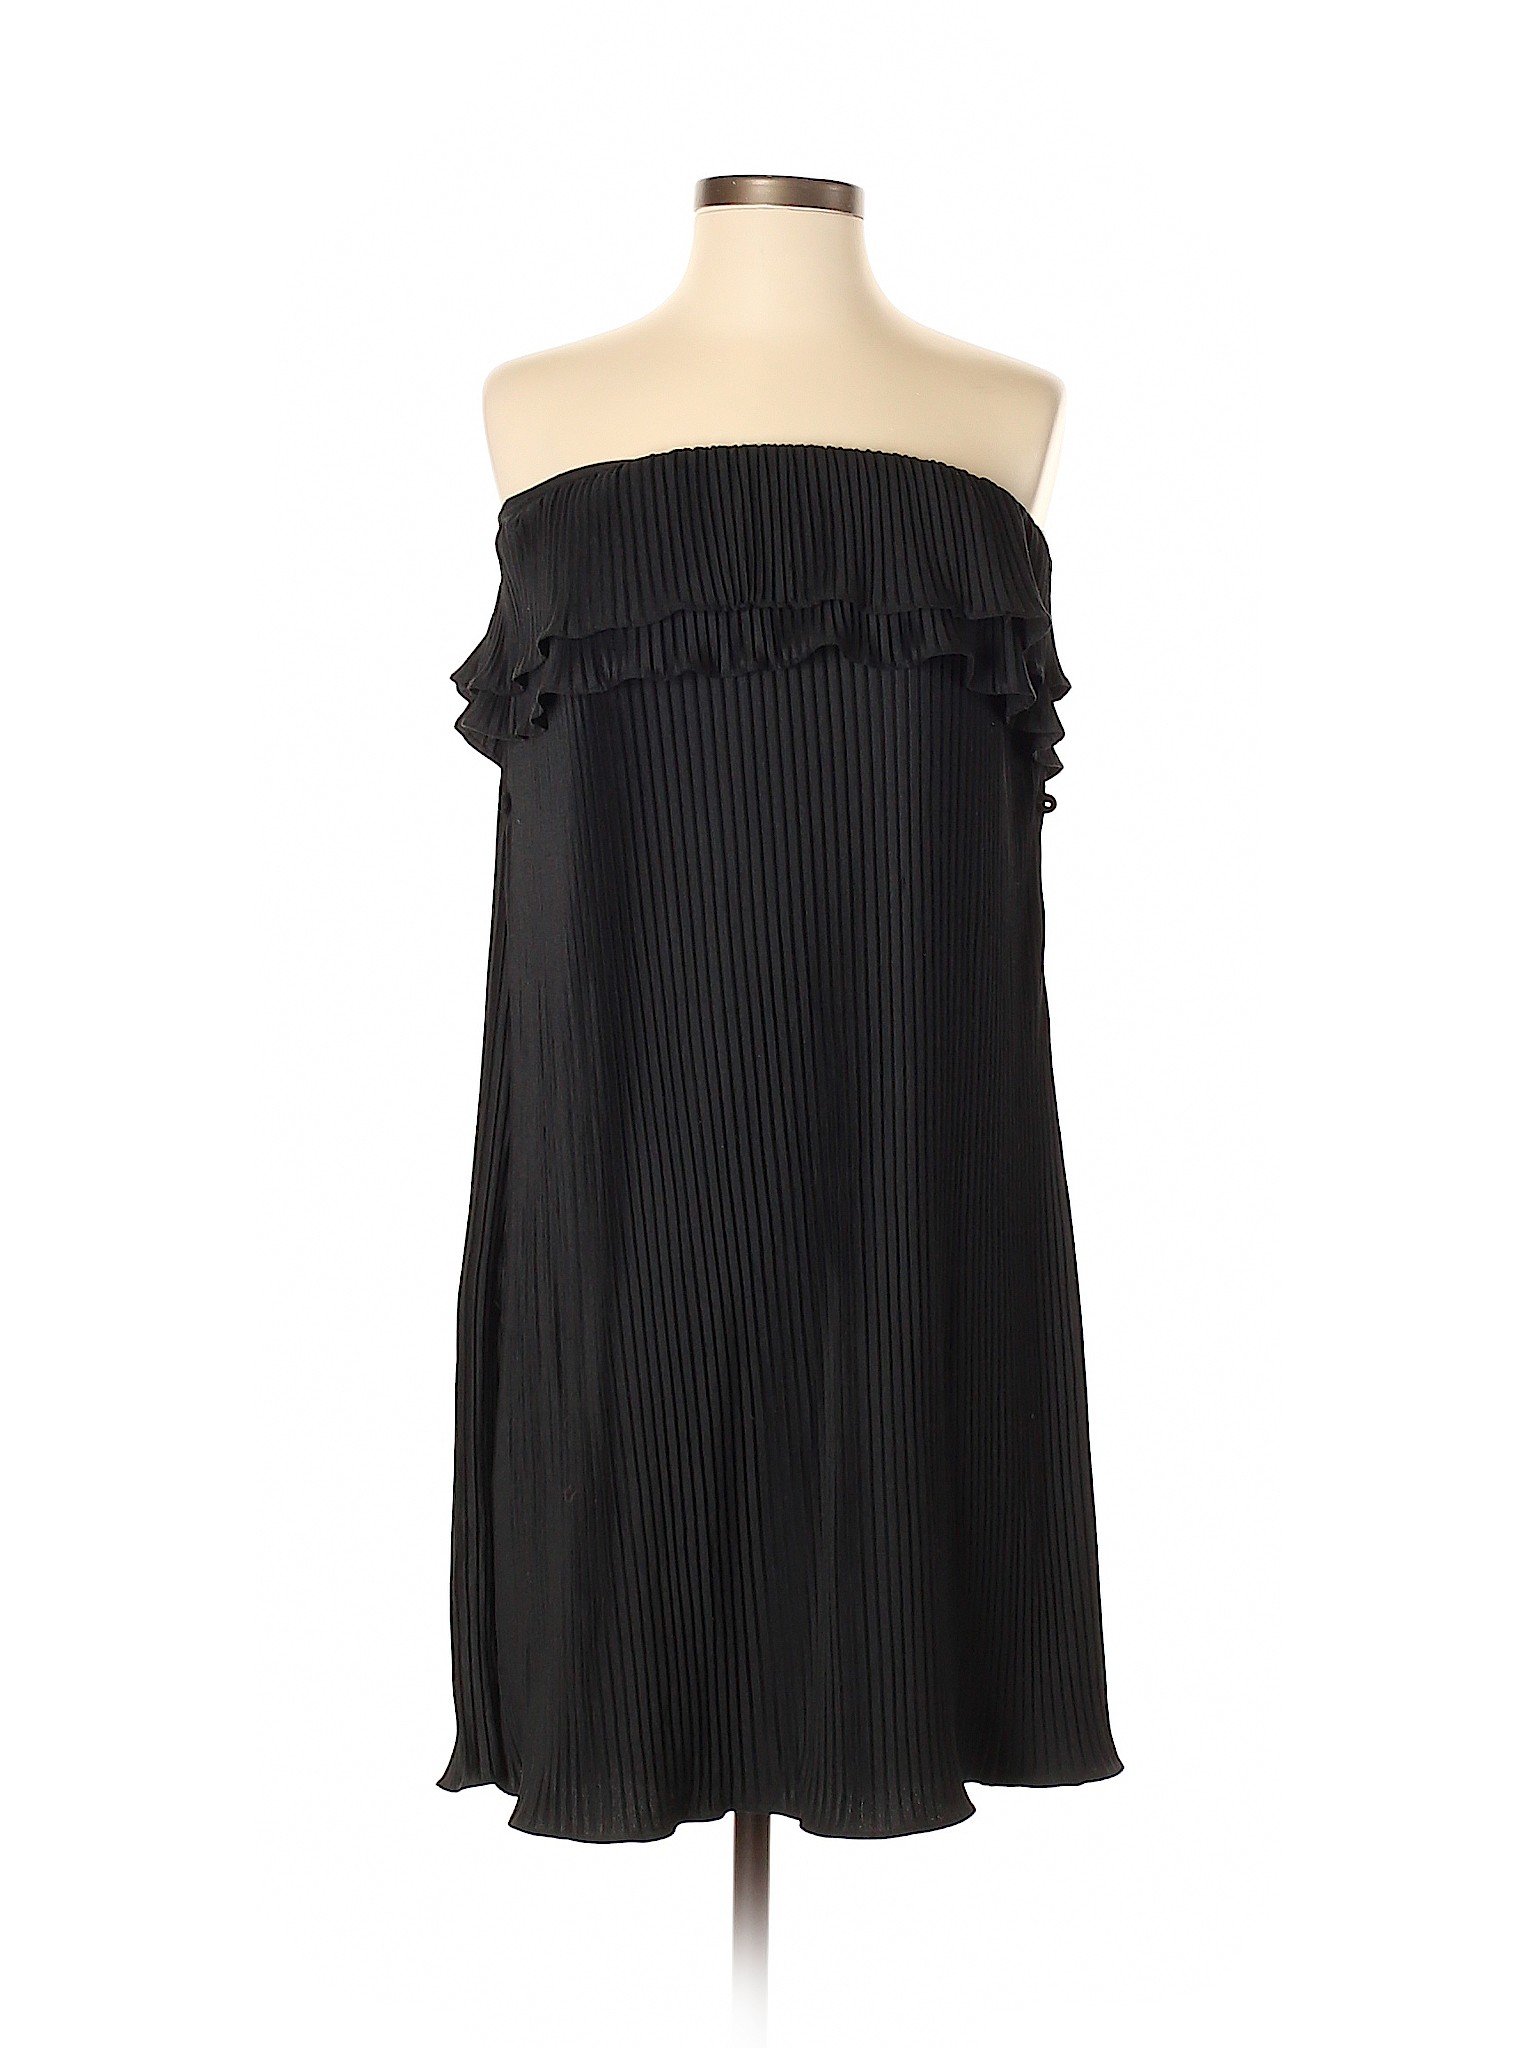 Juicy Couture Women Black Casual Dress Sm | eBay